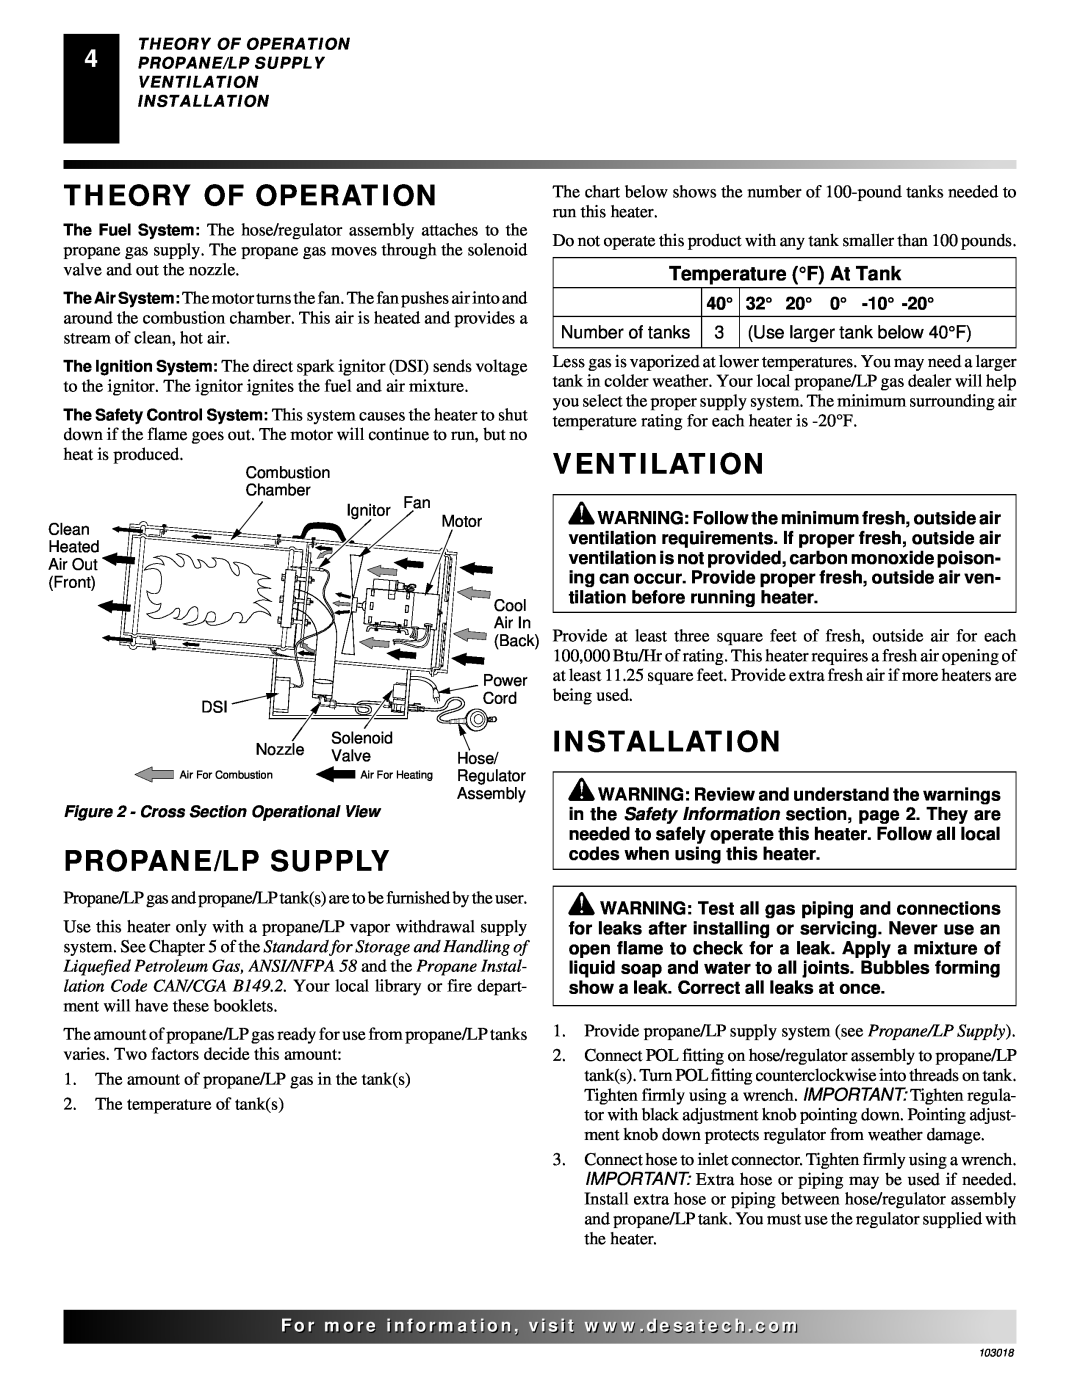 Desa AT Series owner manual Theory Of Operation, Ventilation, Installation, Propane/Lp Supply, Temperature F At Tank 